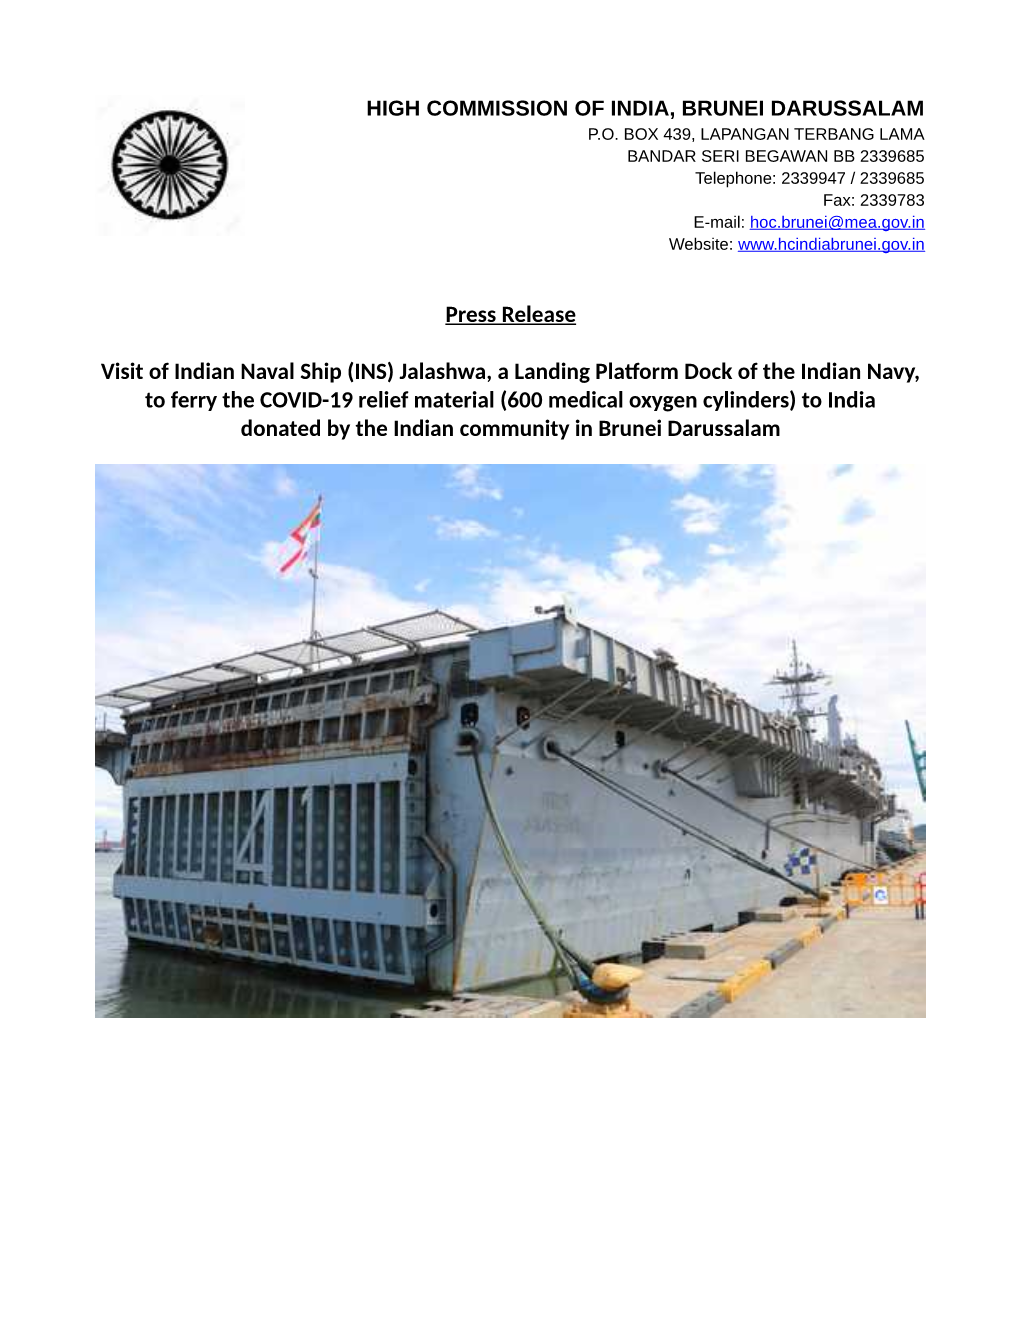 (INS) Jalashwa, a Landing Platform Dock of the Indian Navy, To